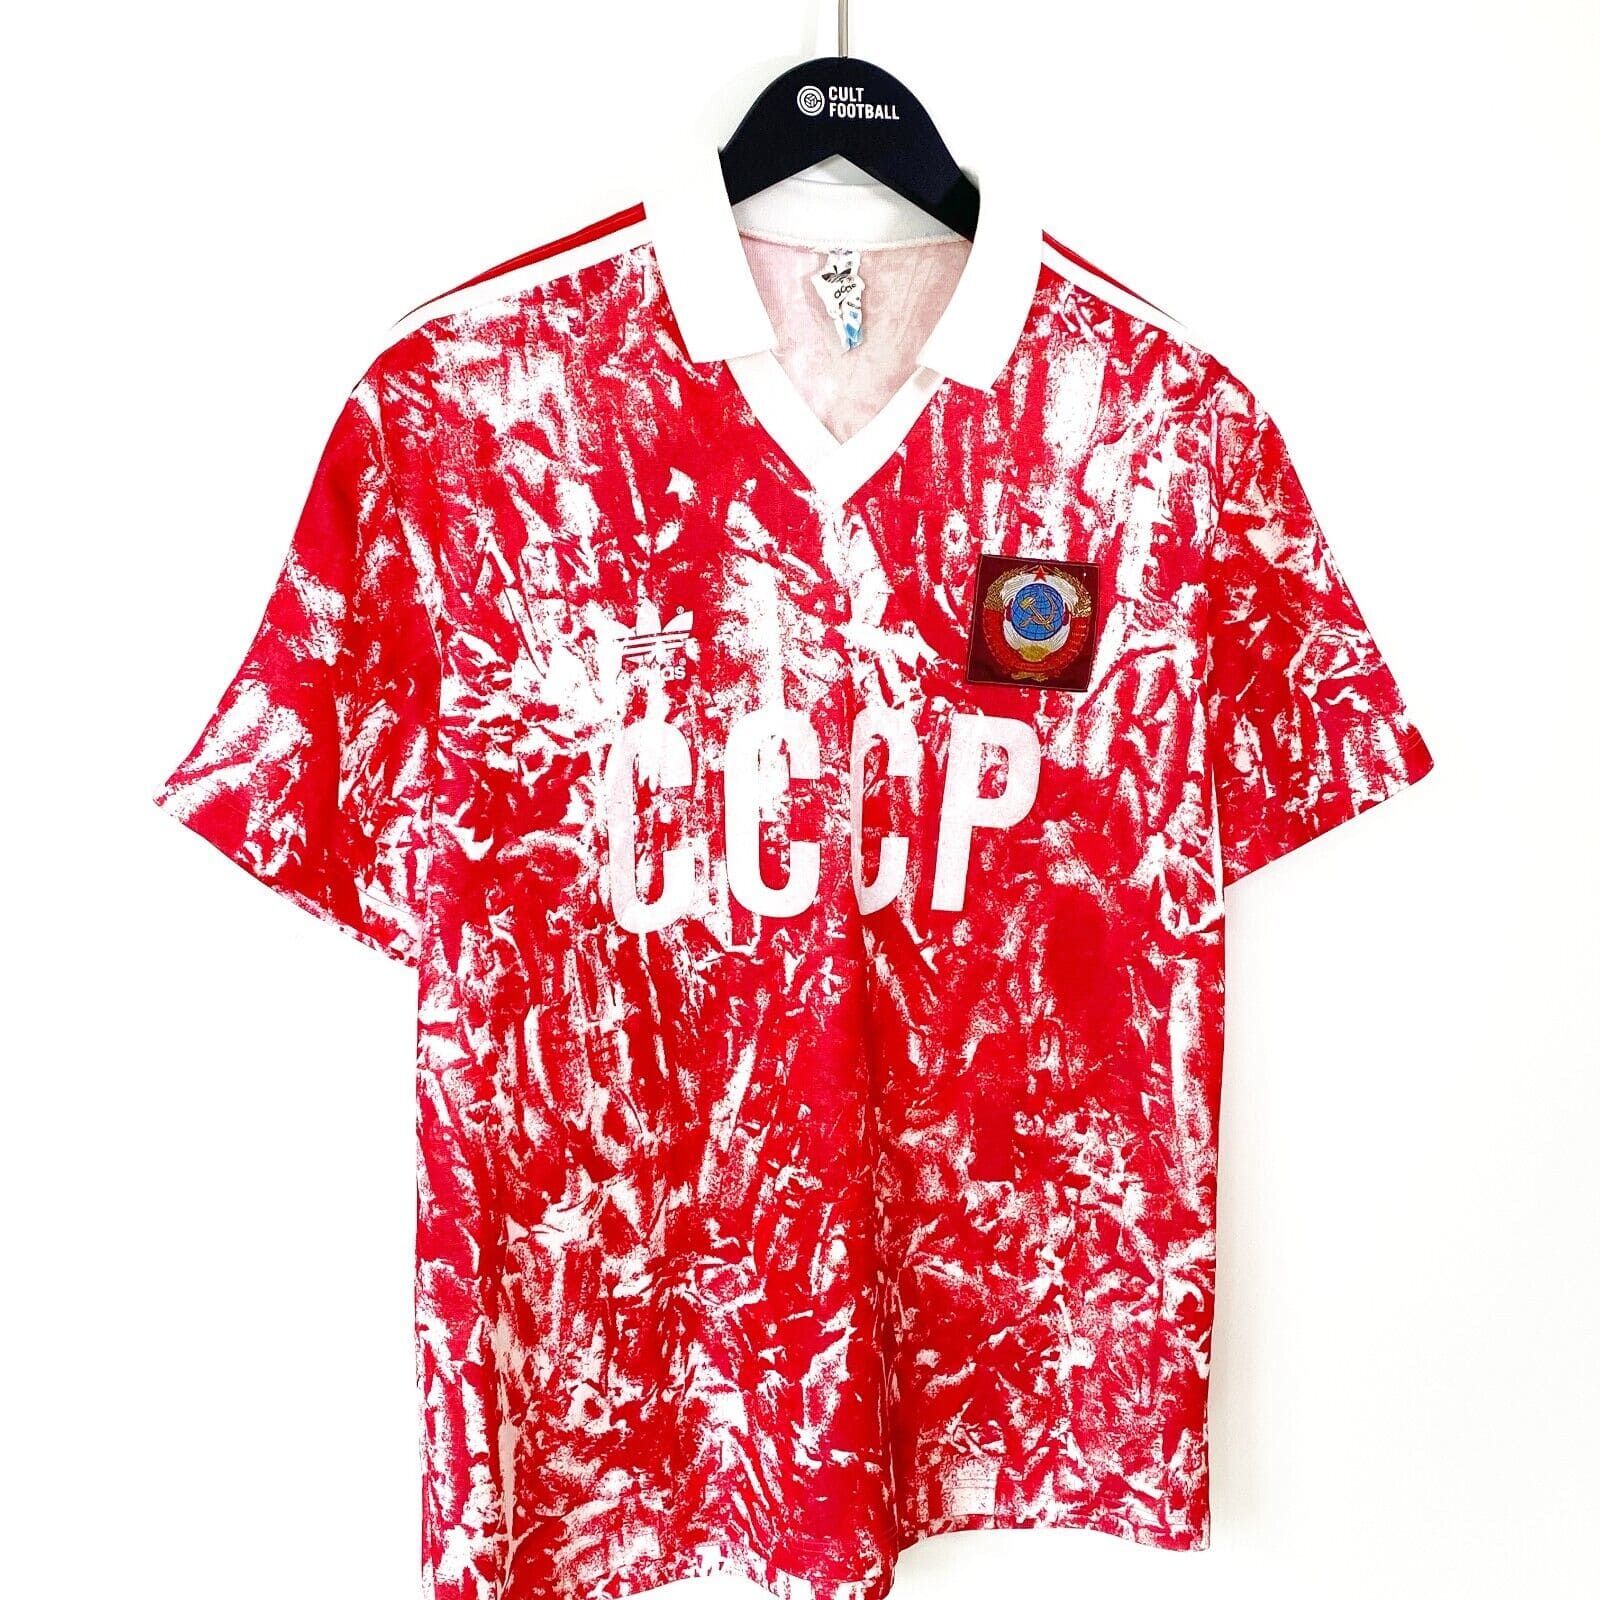 Classic Football Shirts - CCCP x Adidas